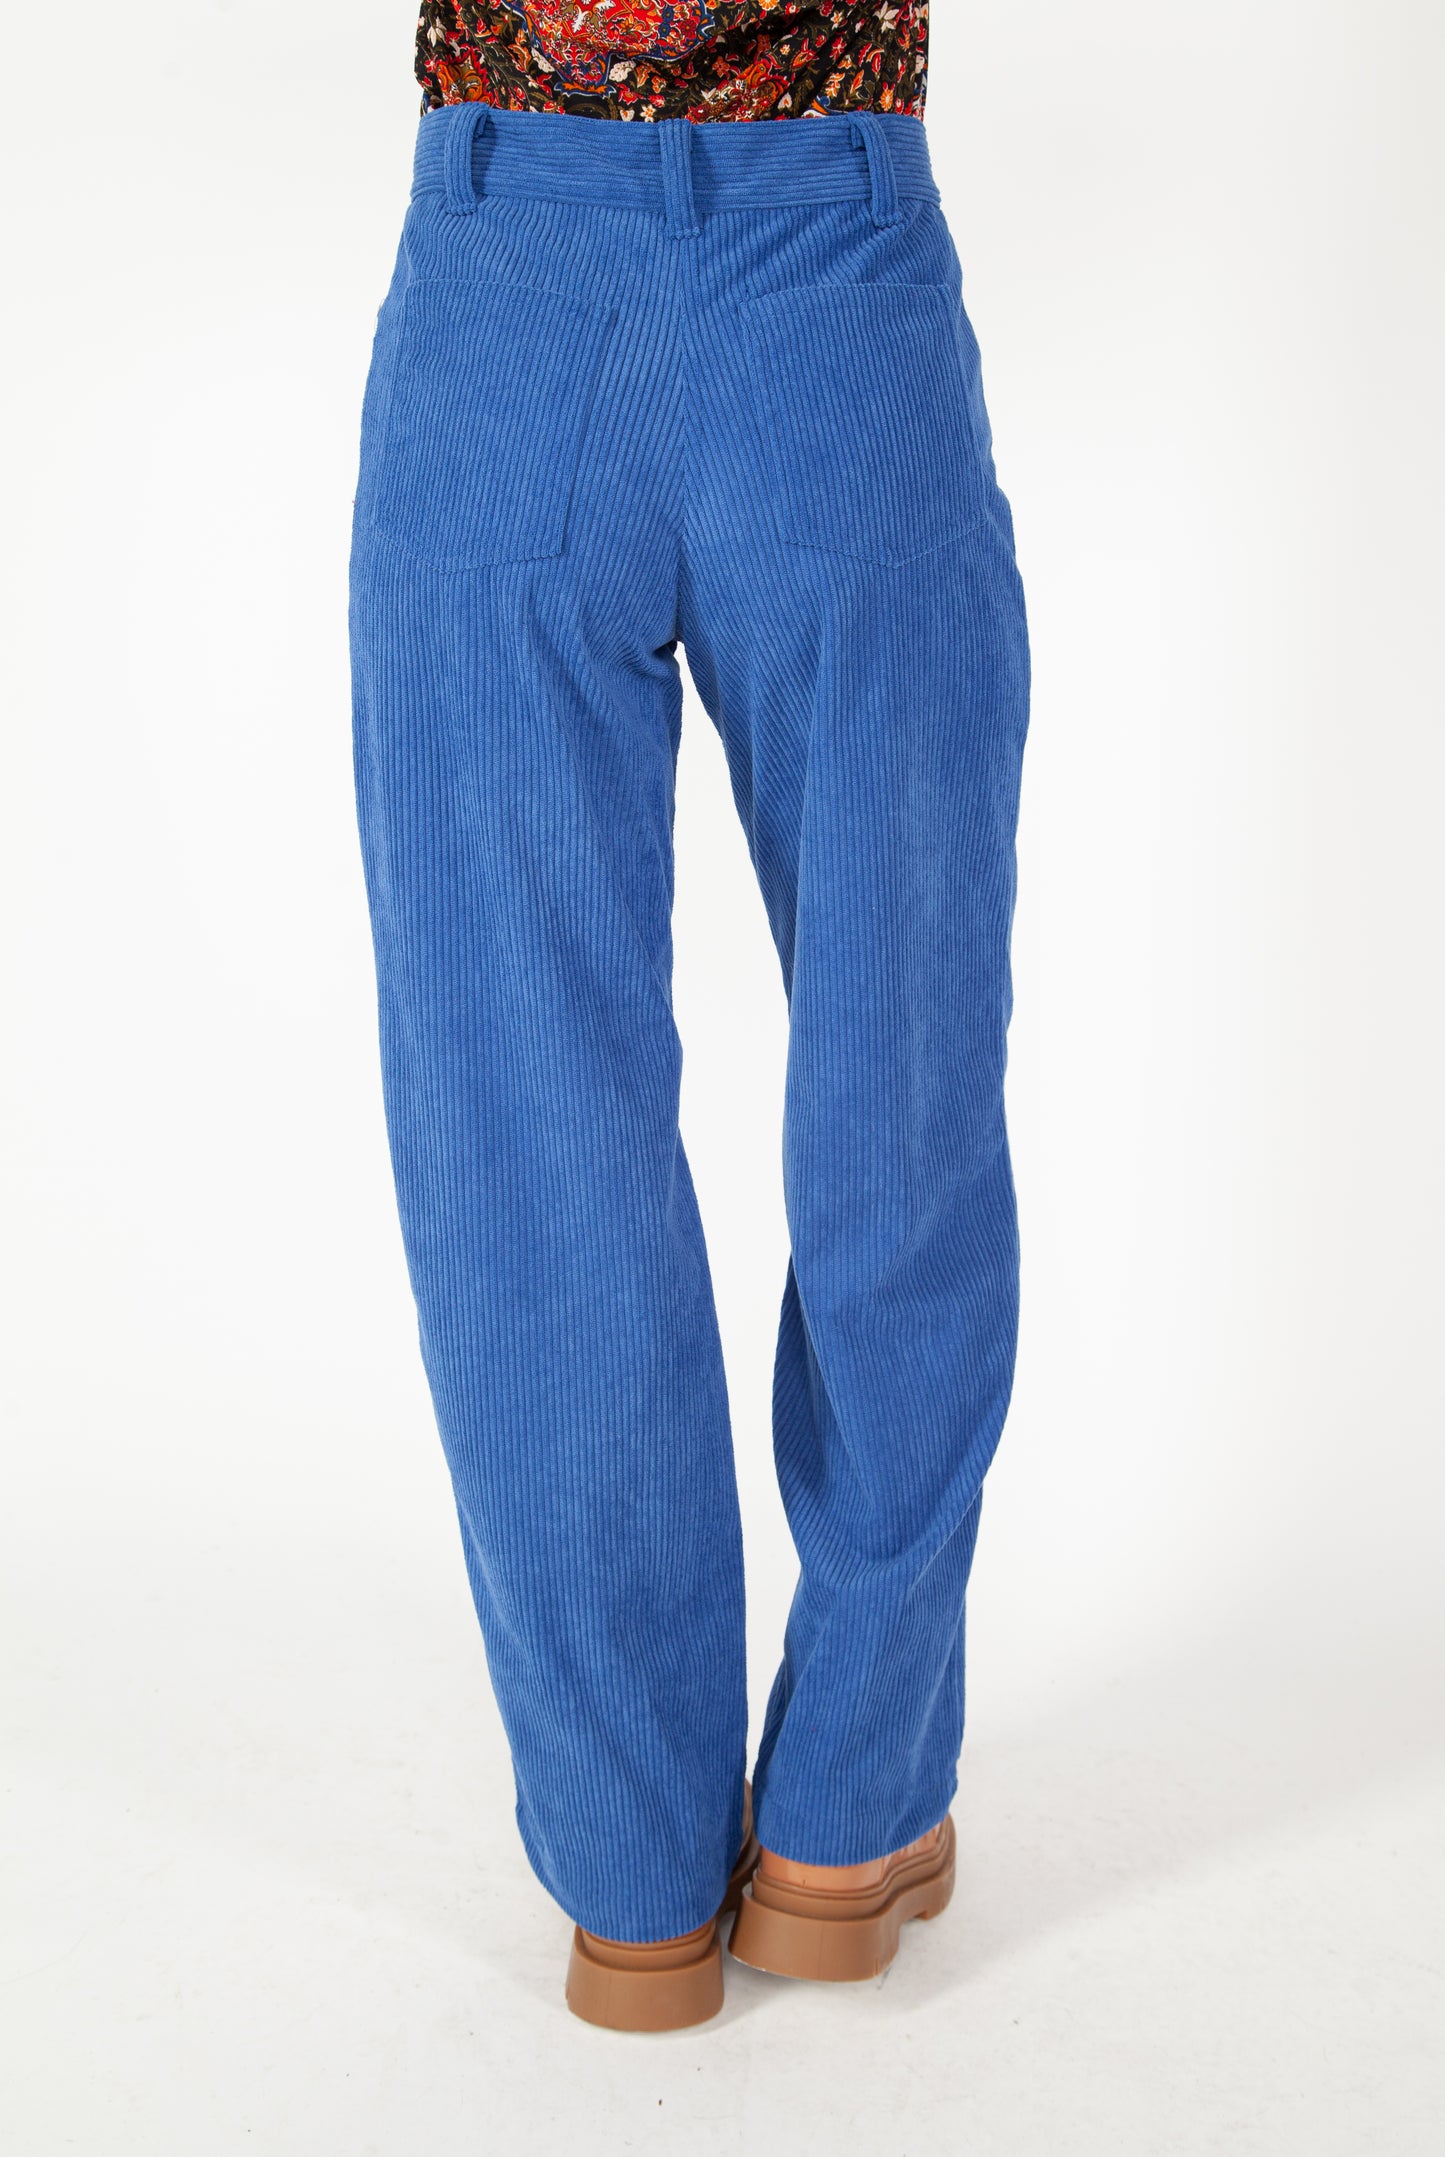 Pantalon Matiz Azul